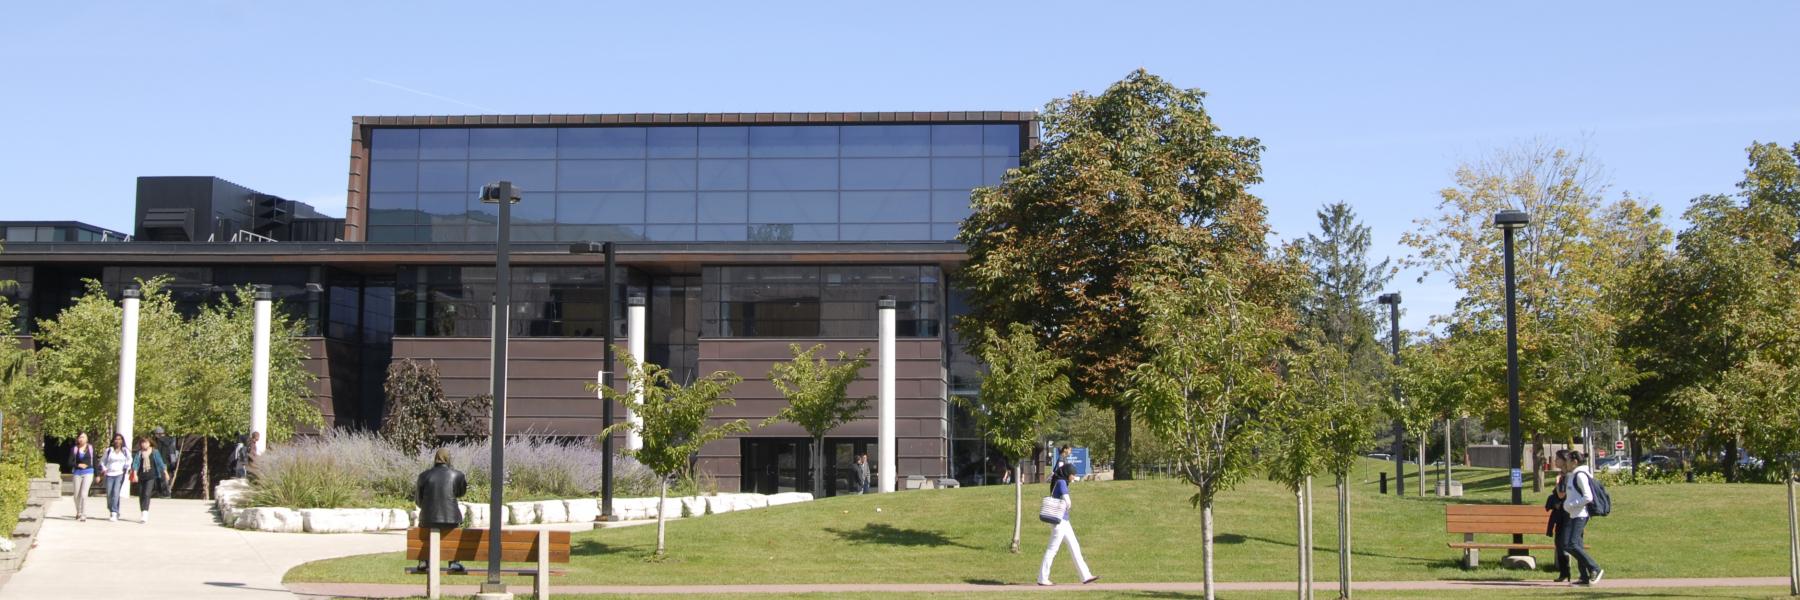 UTSC Academic Resource Center building